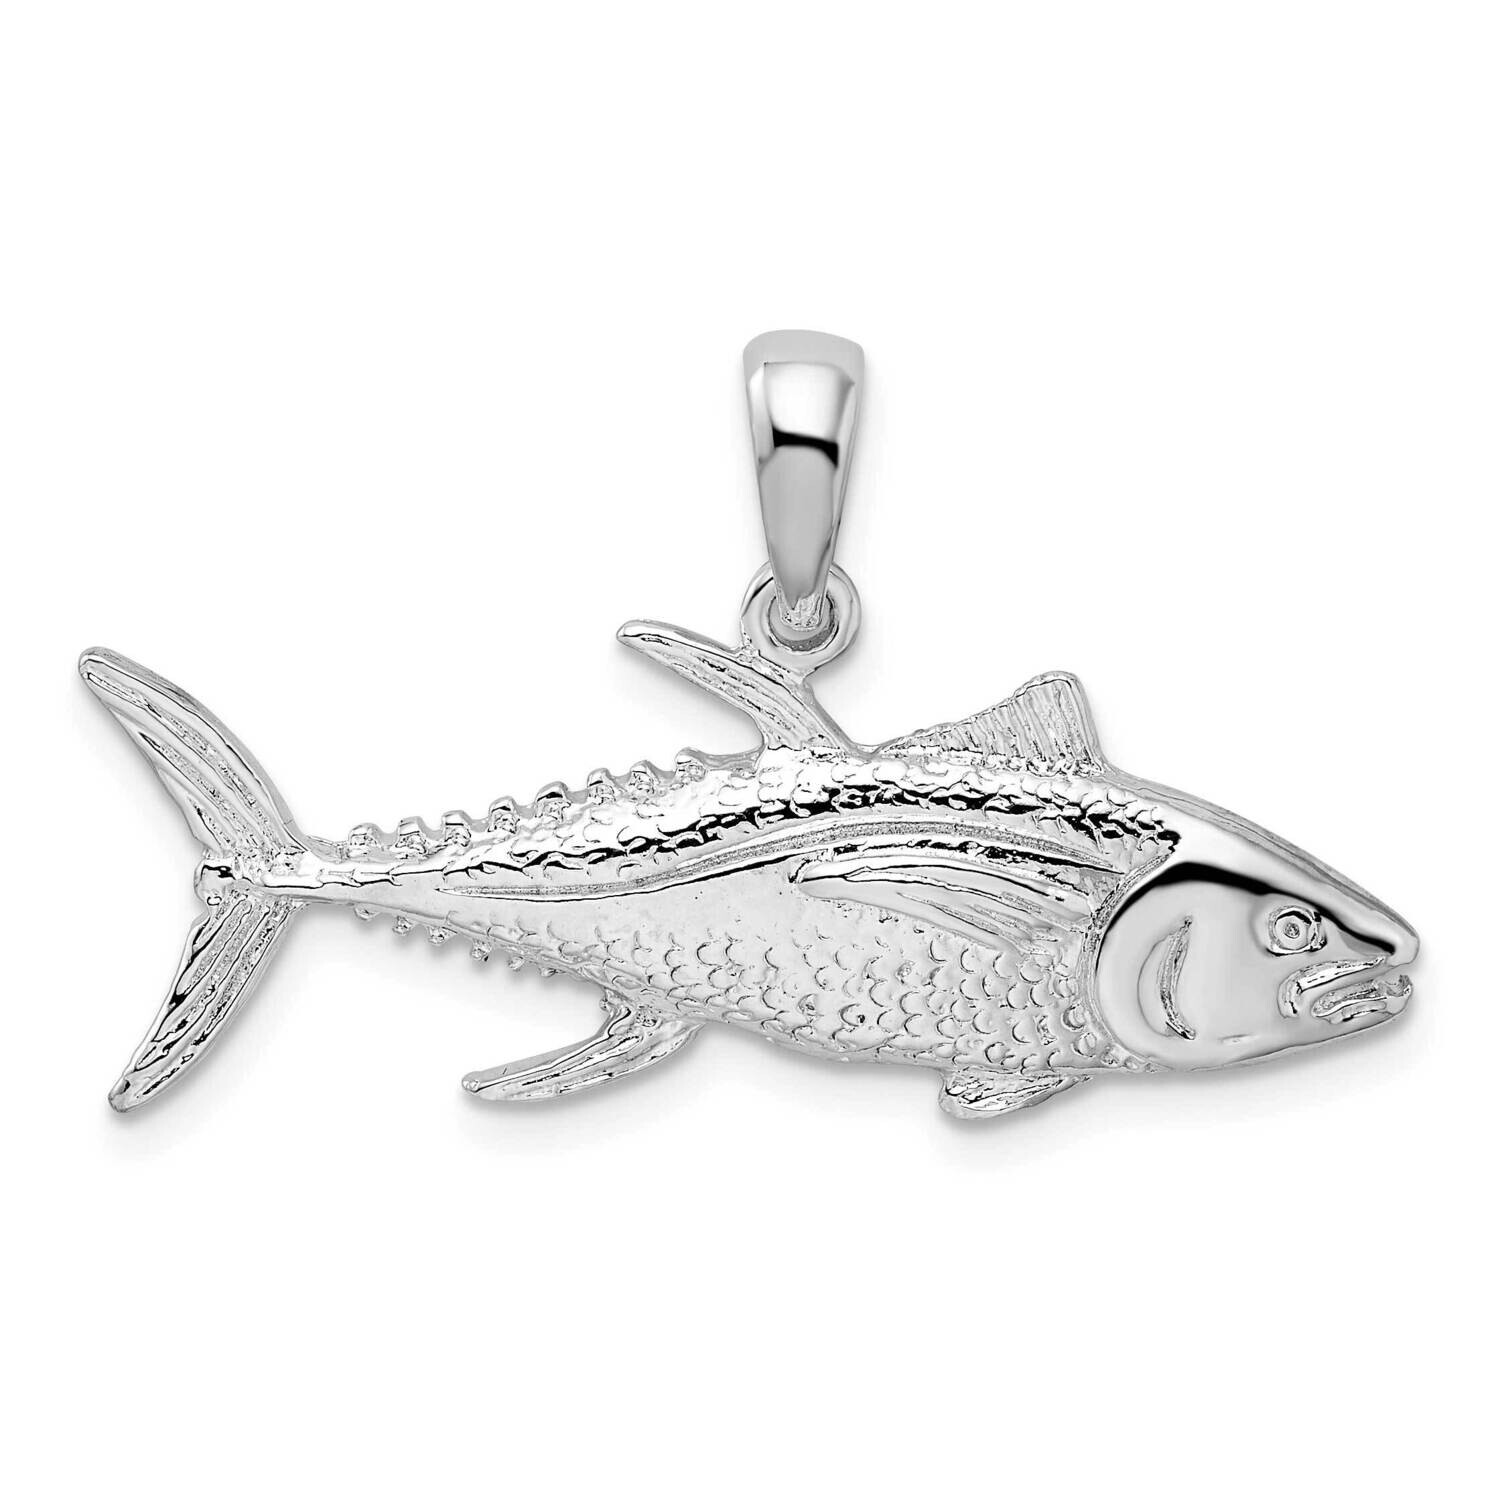 Yellowfin Tuna Fish Pendant Sterling Silver Polished QC10332